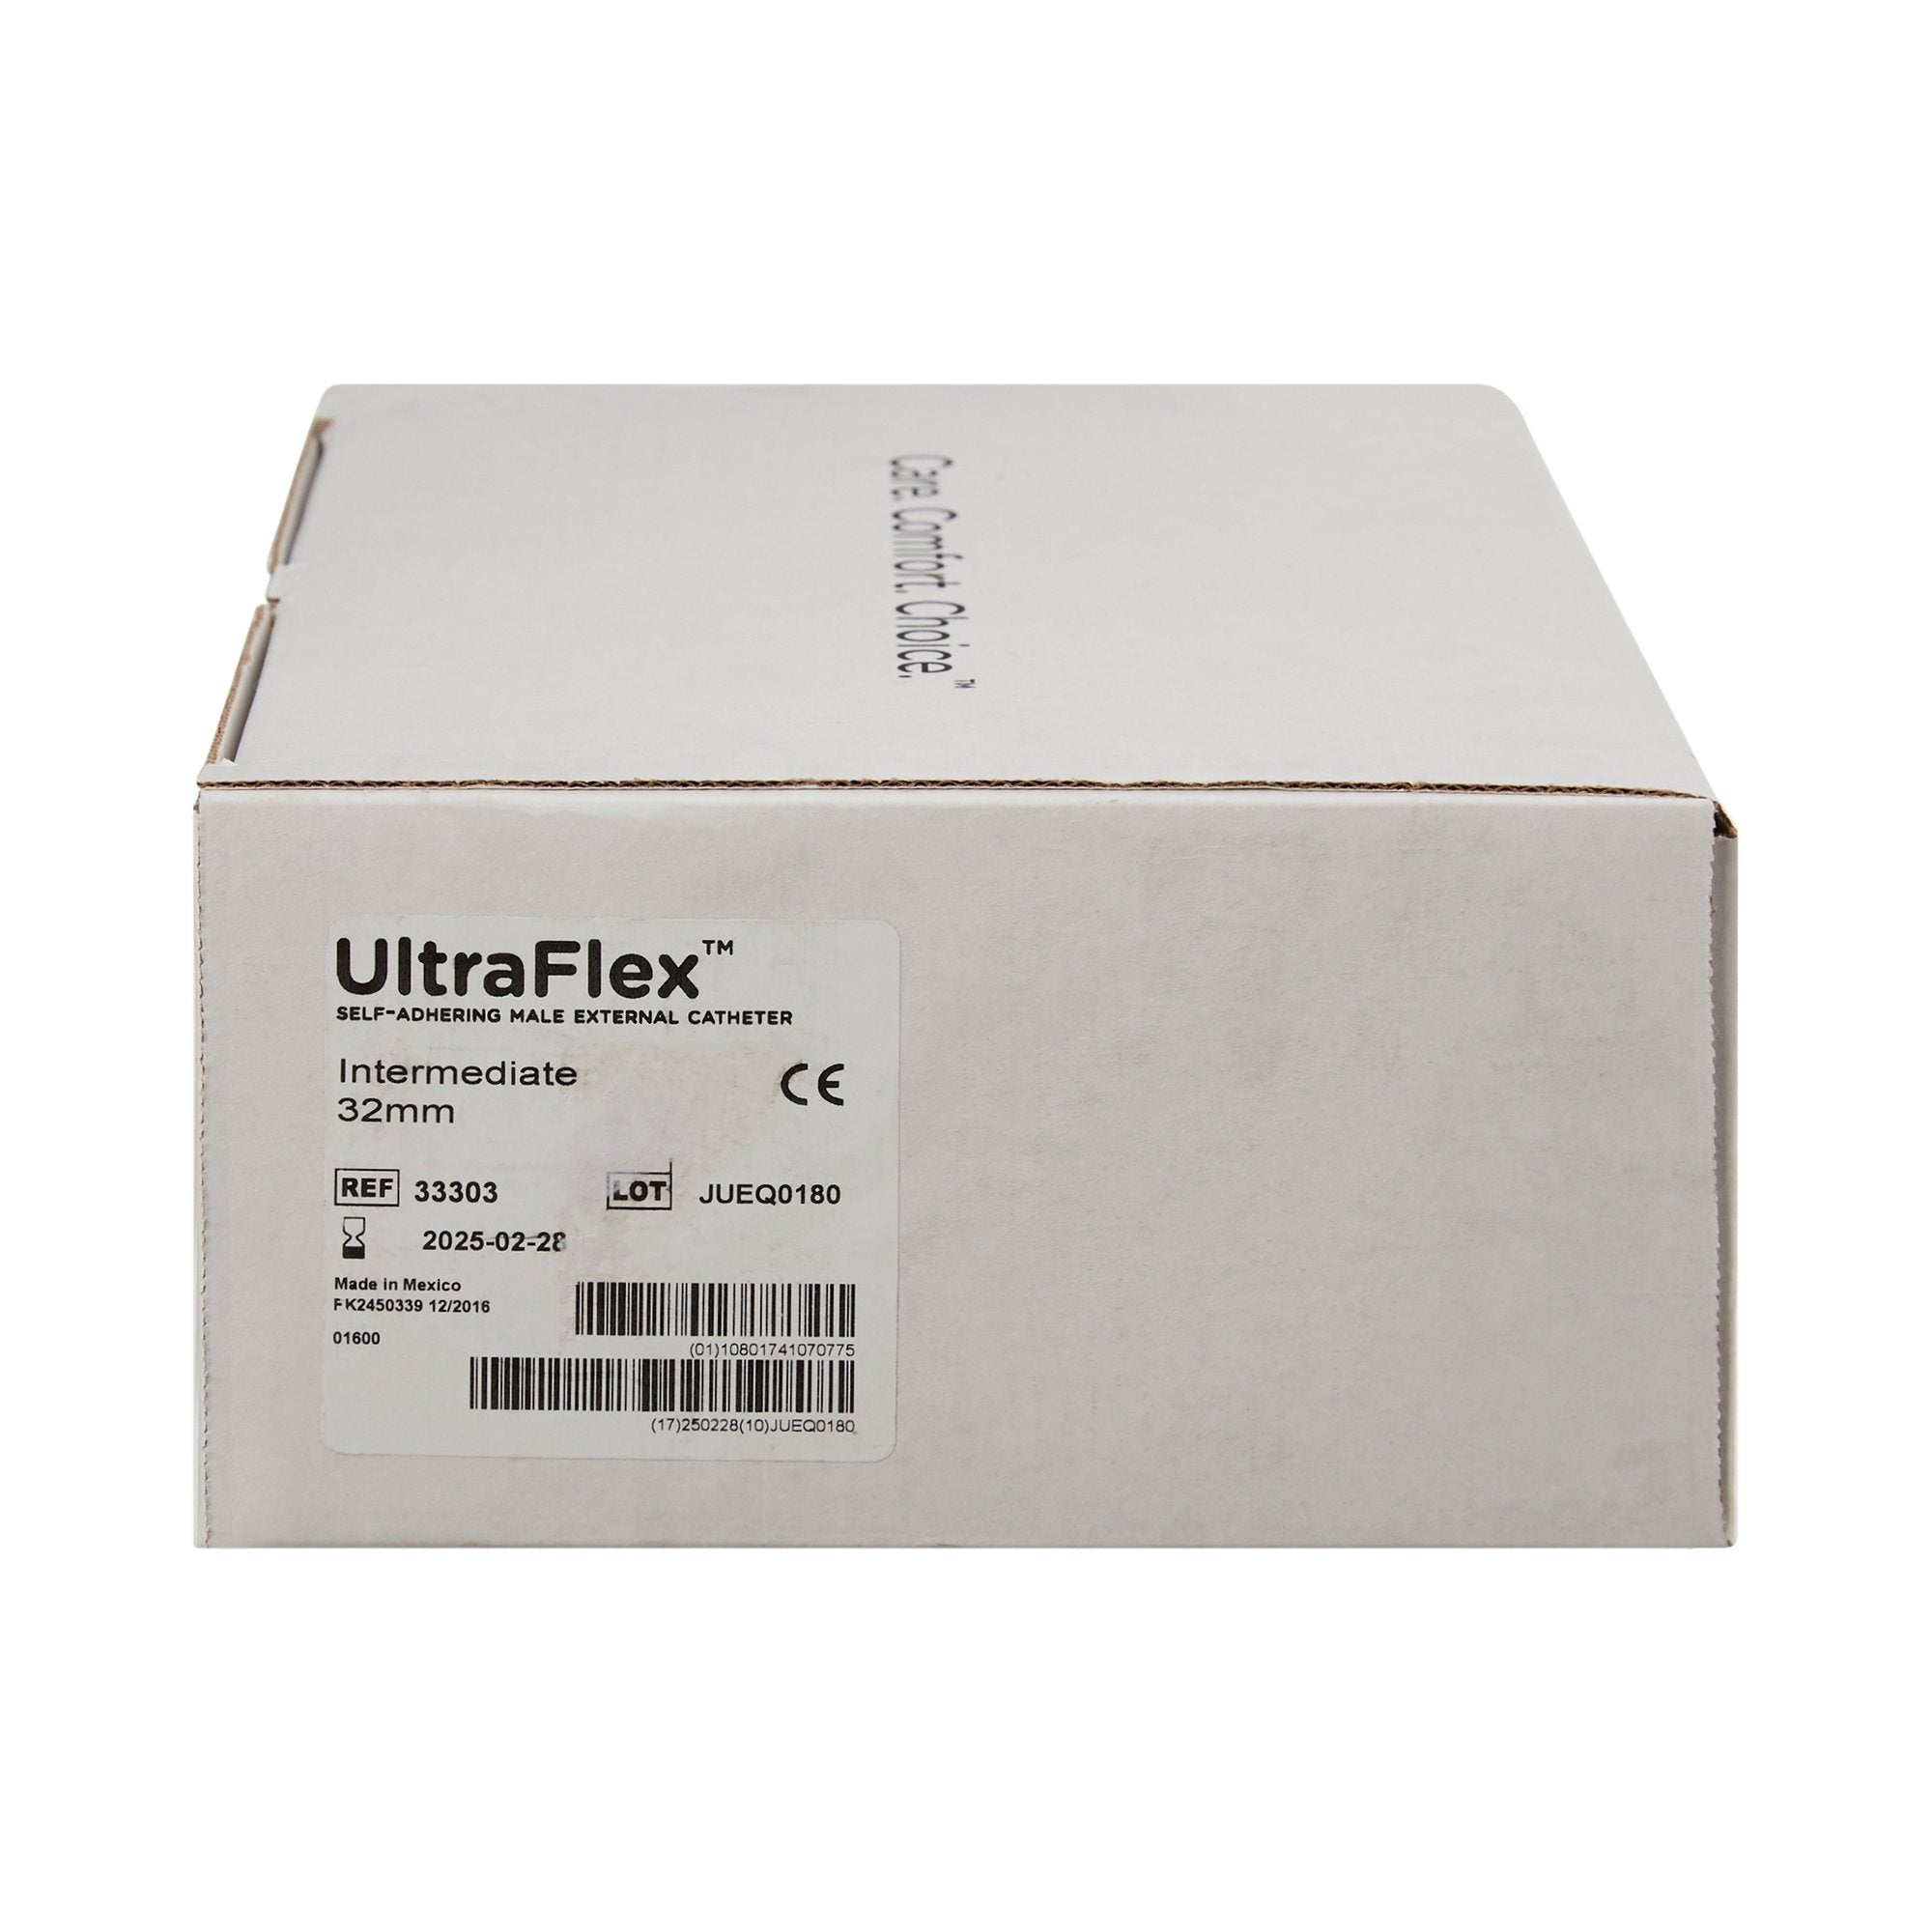 Bard UltraFlex? Male External Catheter, Intermediate